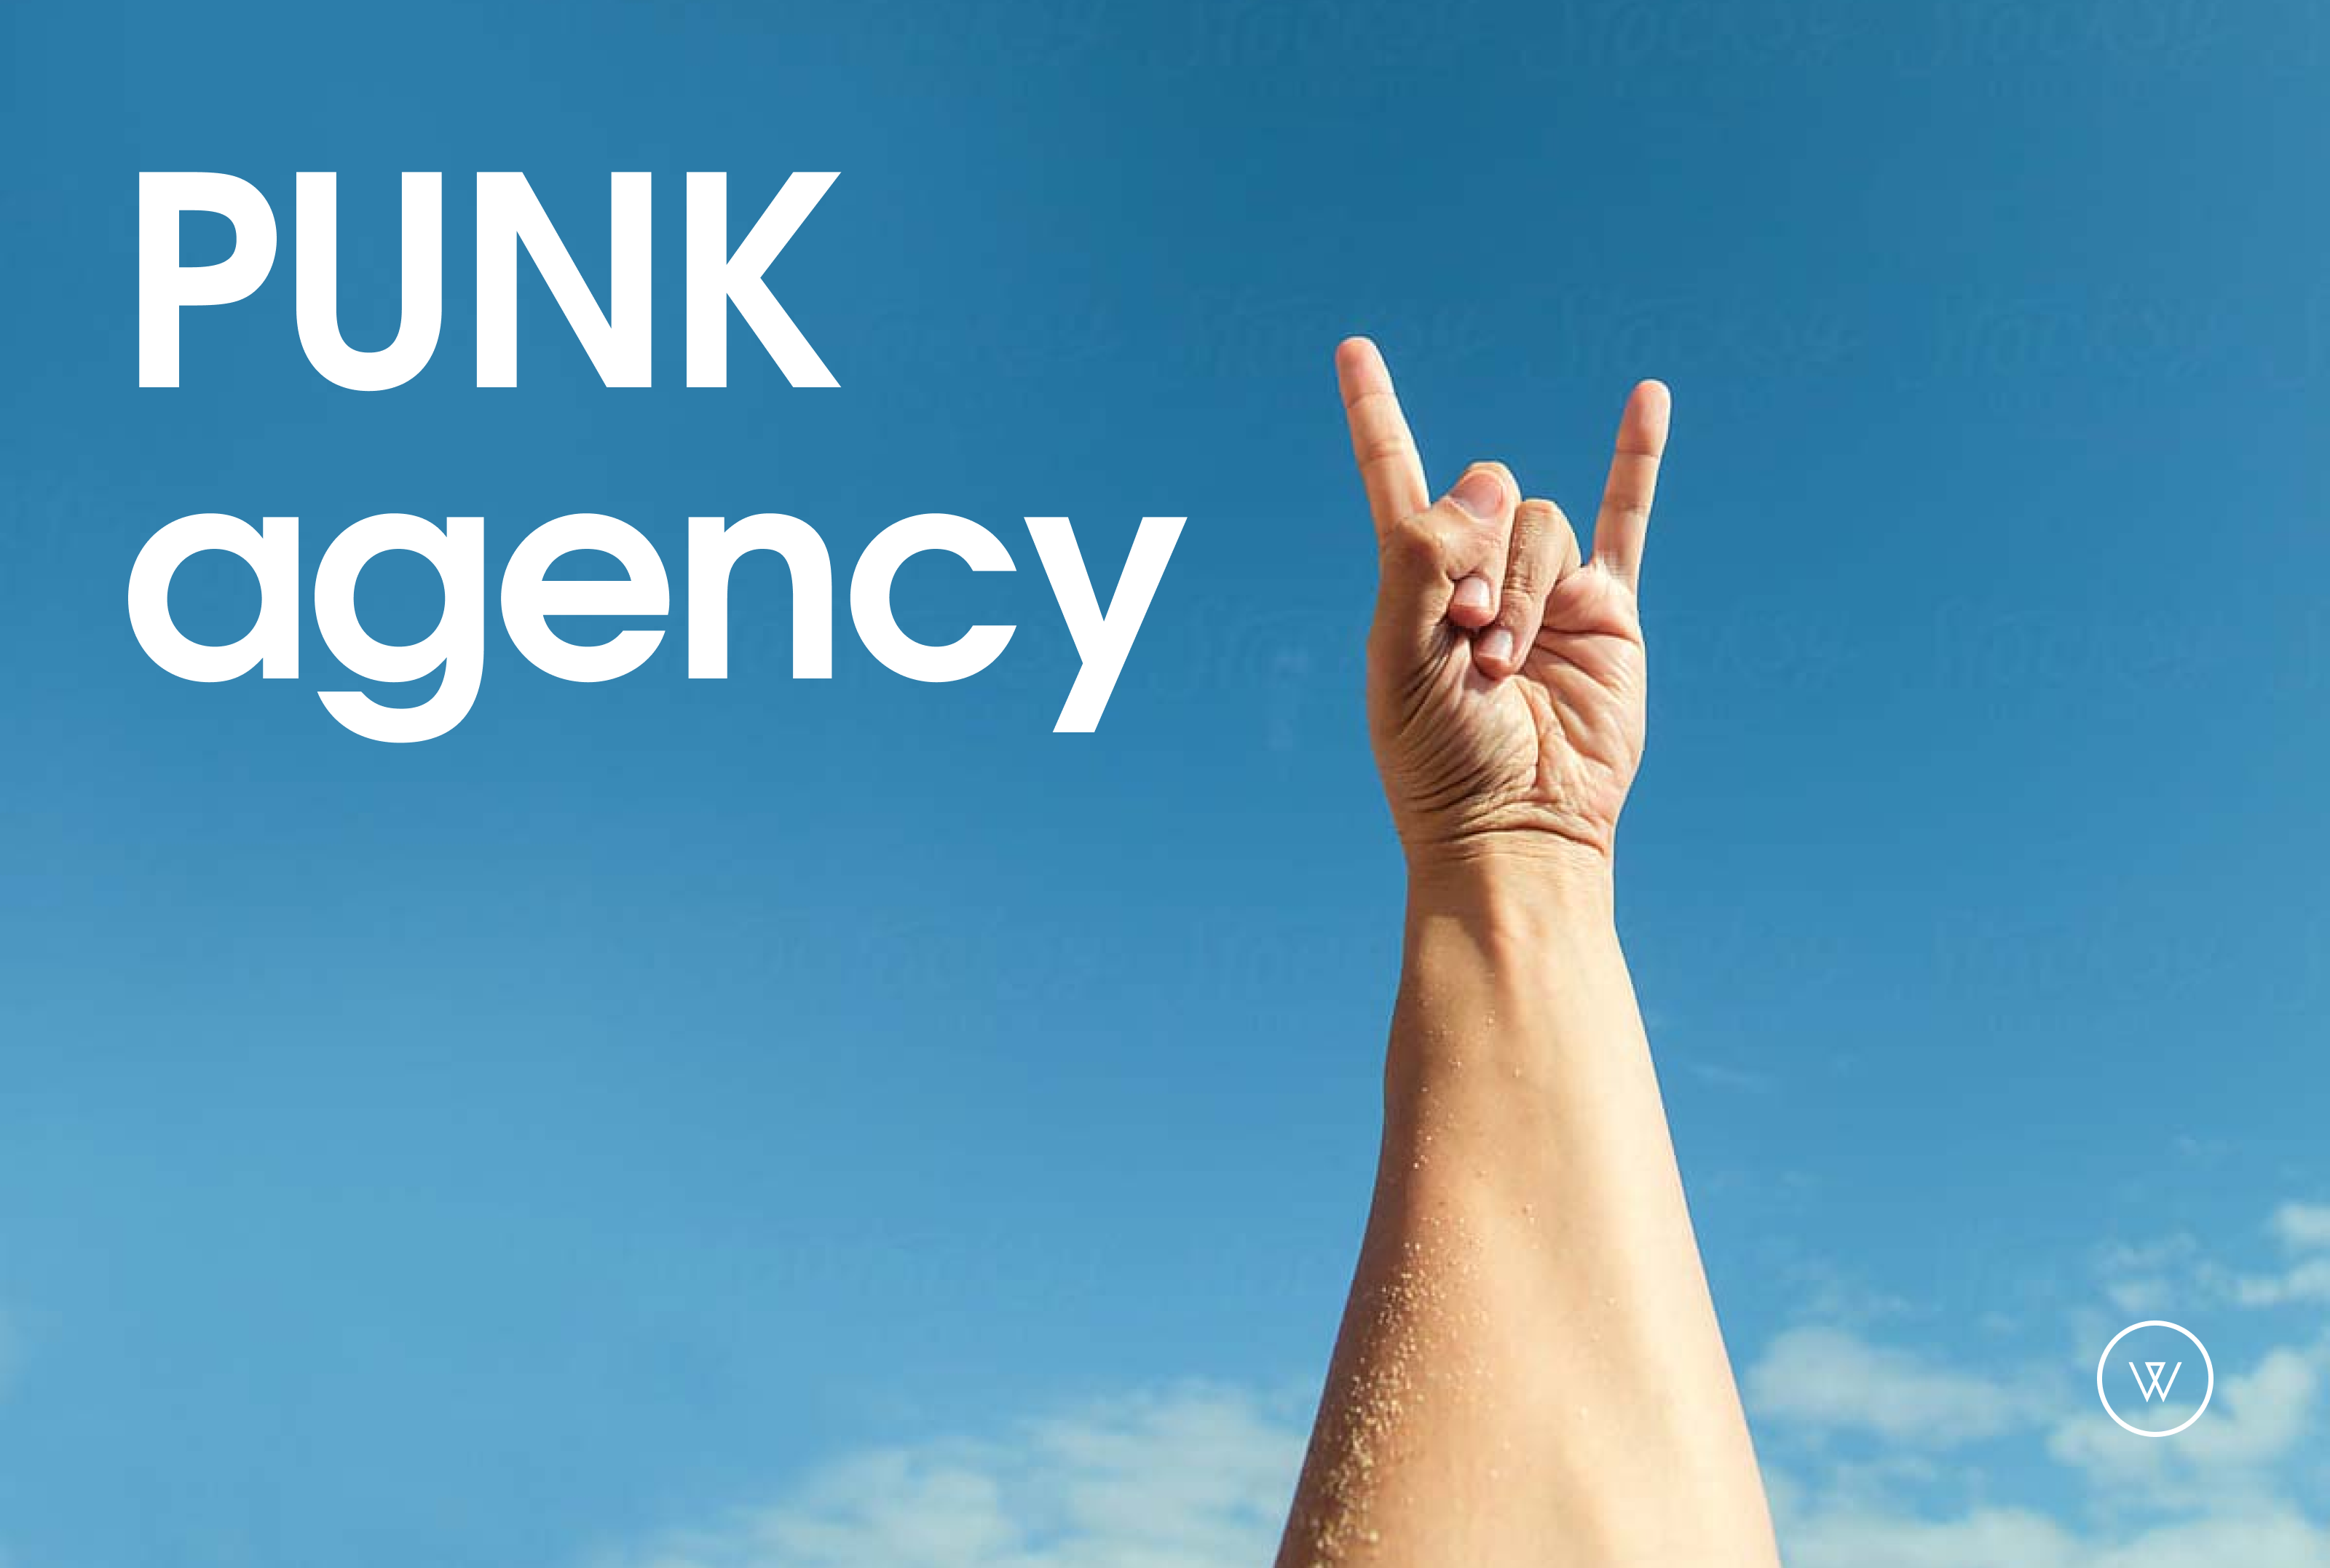 Punk agency